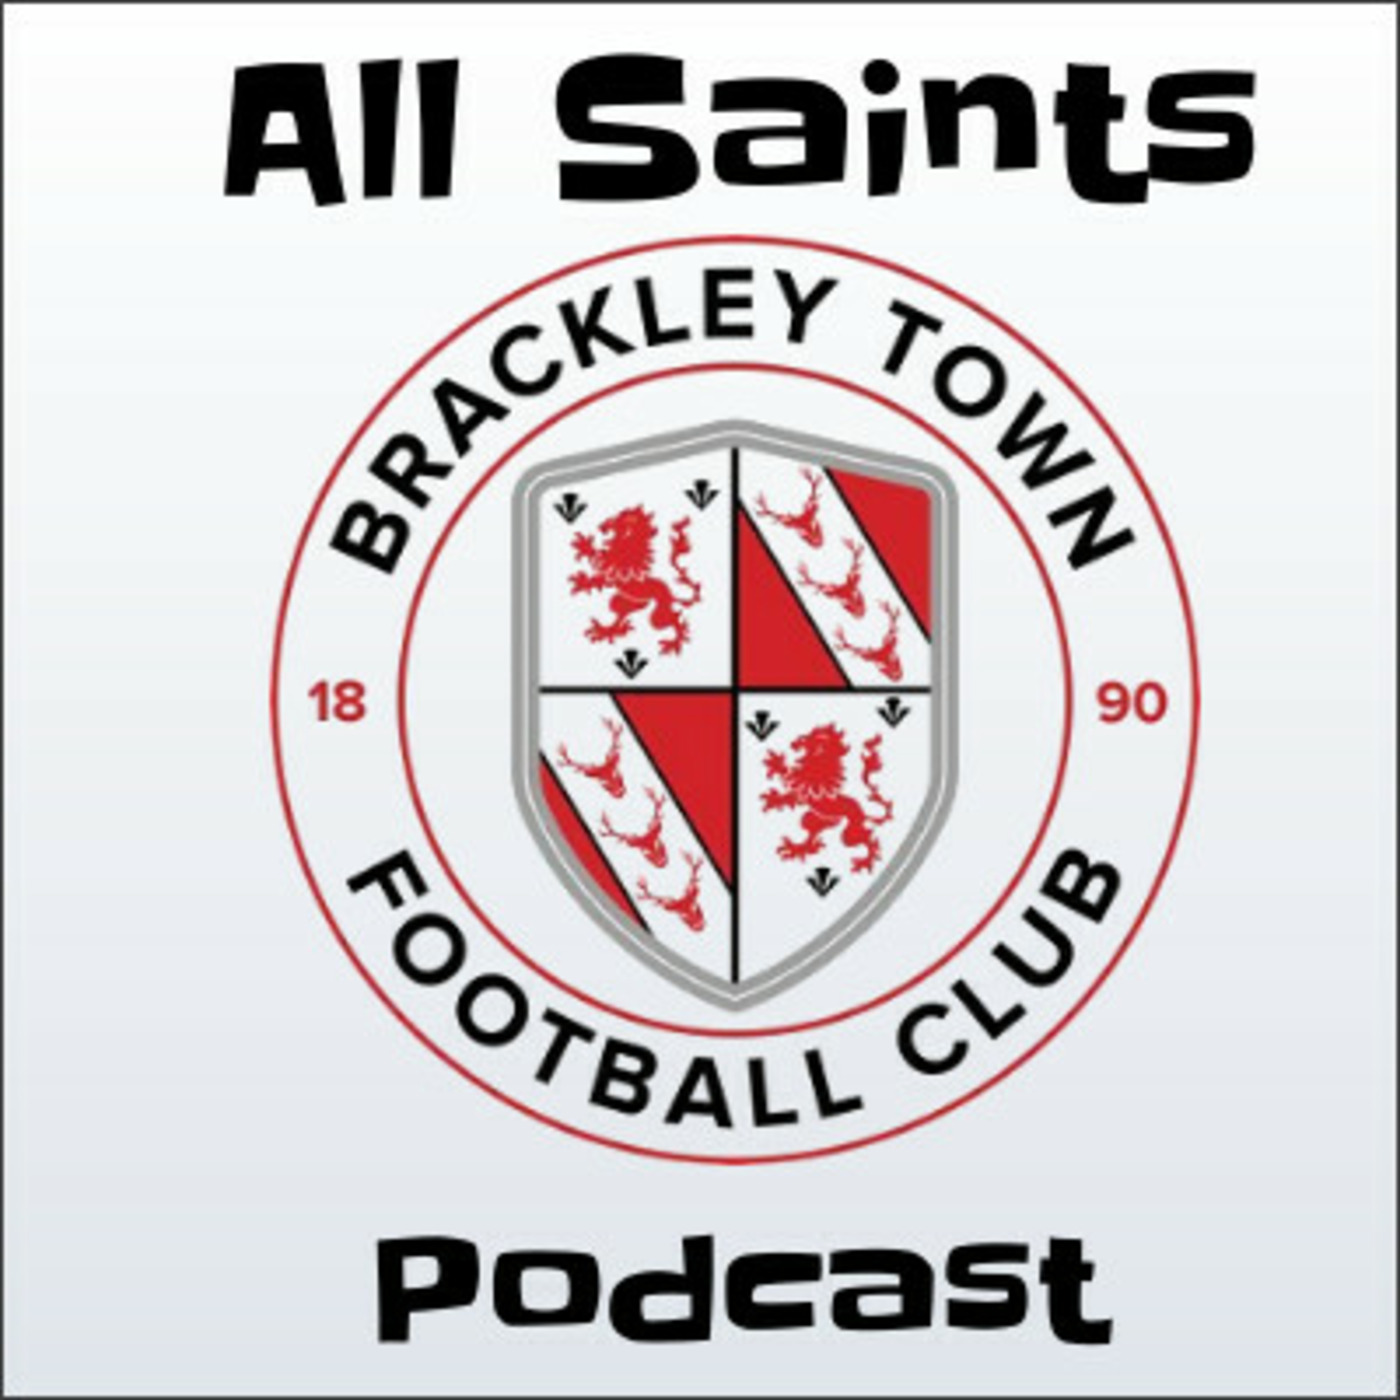 Episode 36: All saints podcast 67